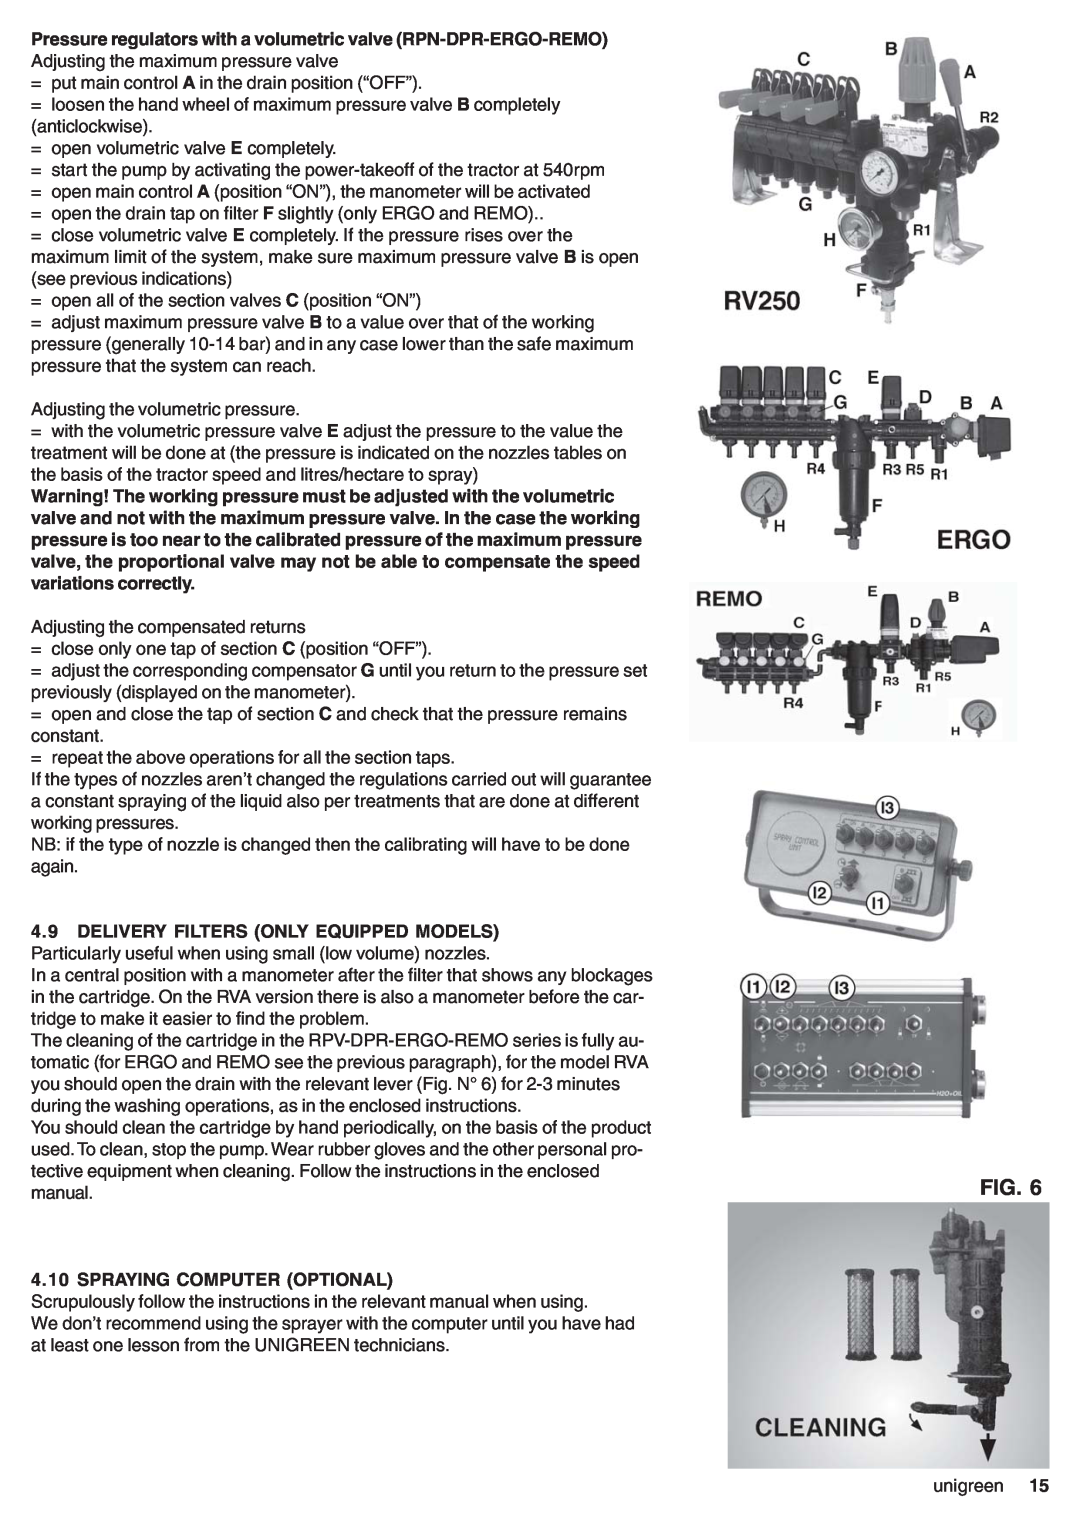 Unigreen CAMPO 11 - 16 - 22 - 32 Pressure regulators with a volumetric valve RPN-DPR-ERGO-REMO, Spraying Computer Optional 